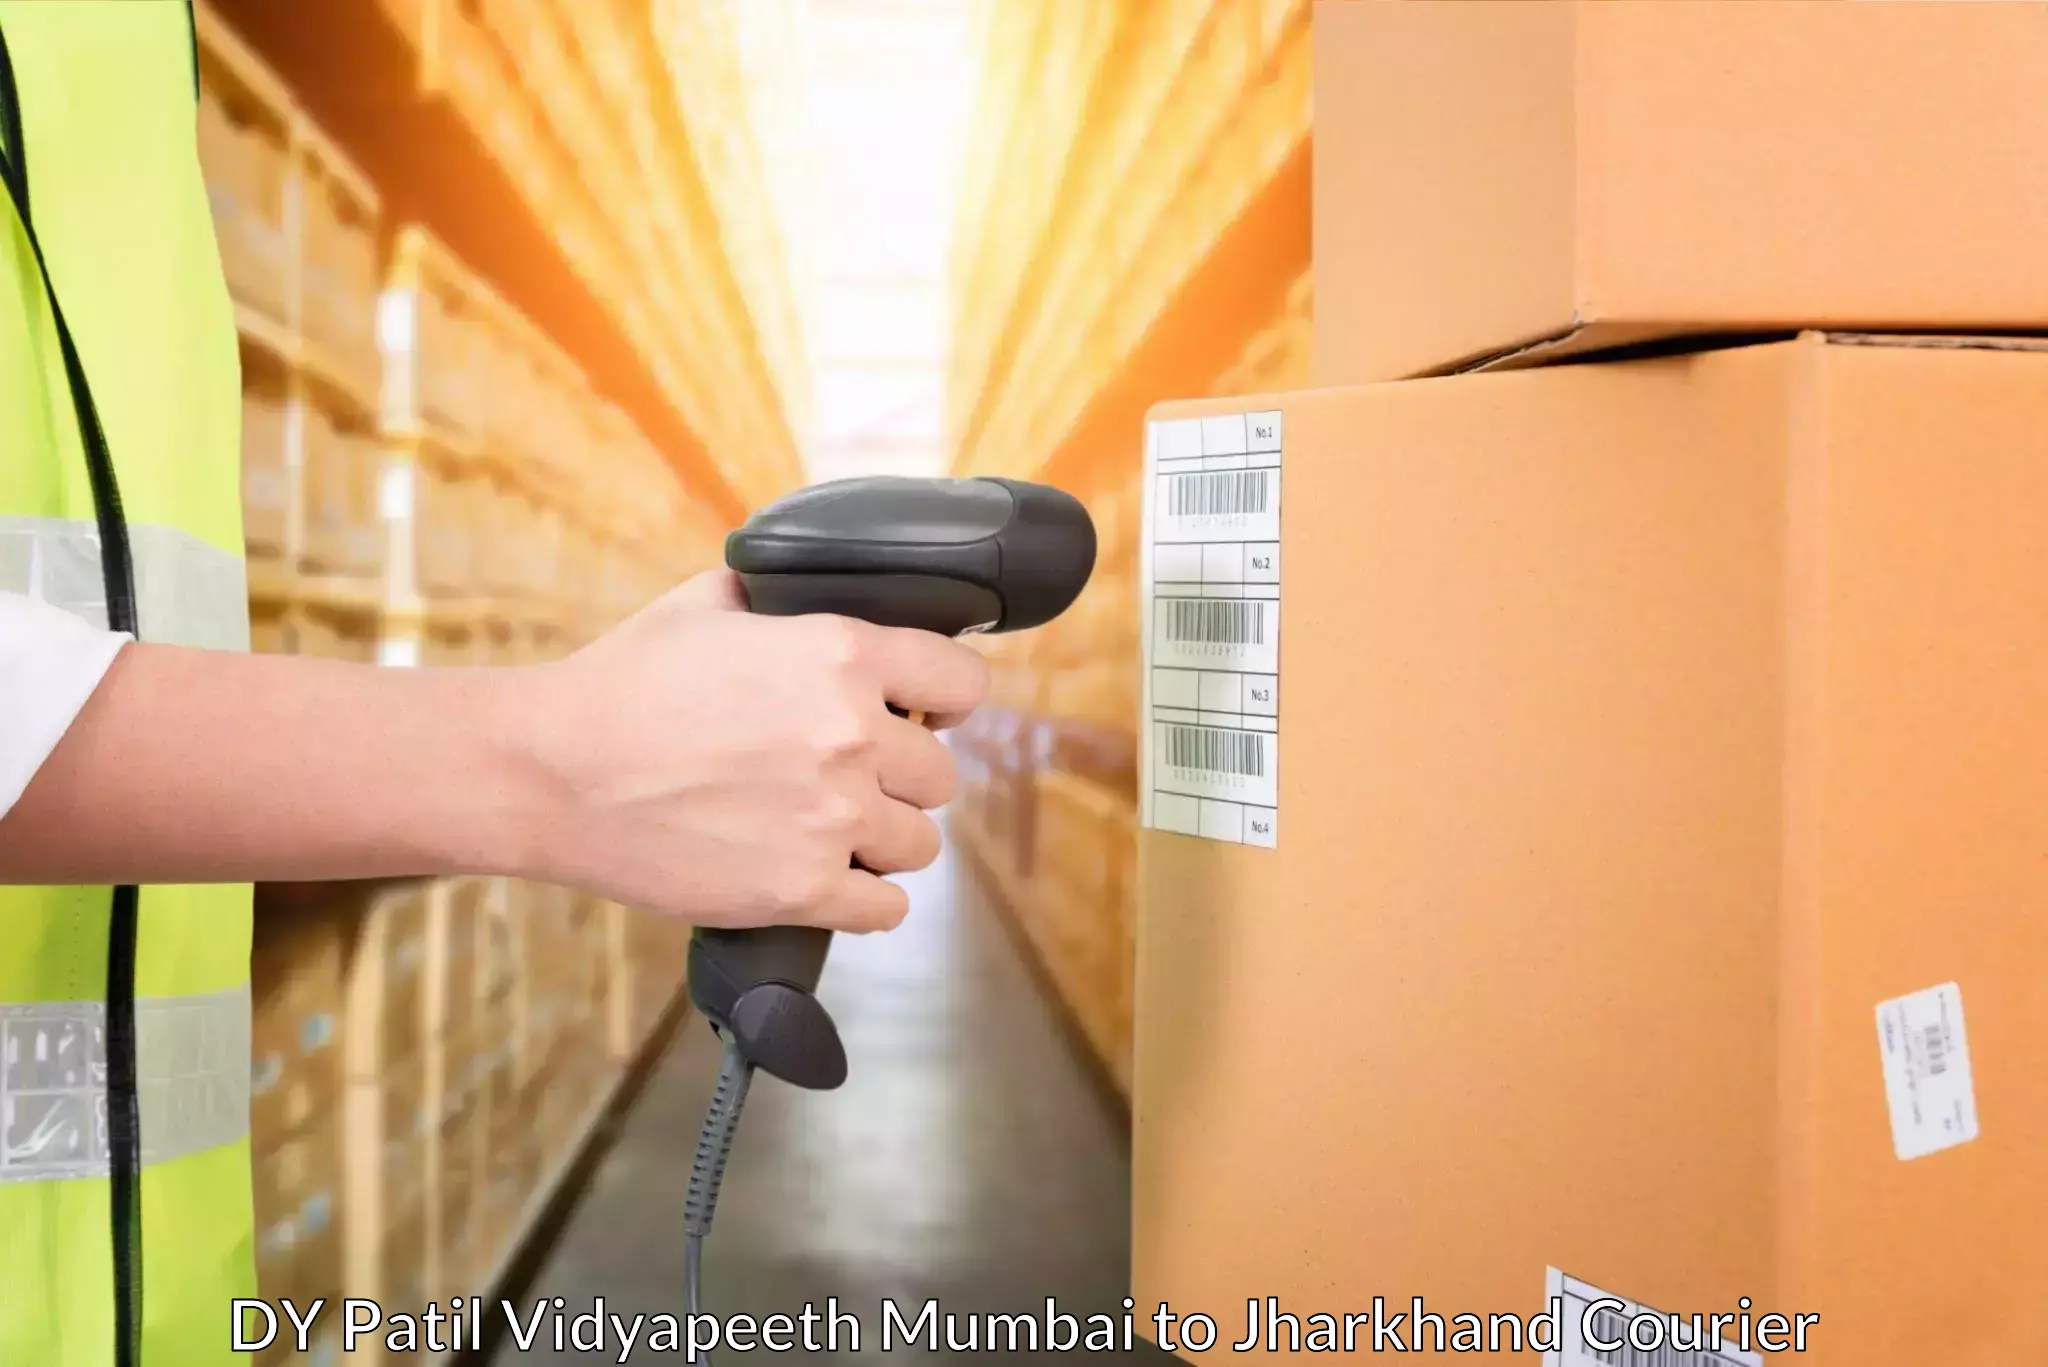 High-priority parcel service DY Patil Vidyapeeth Mumbai to Ranchi